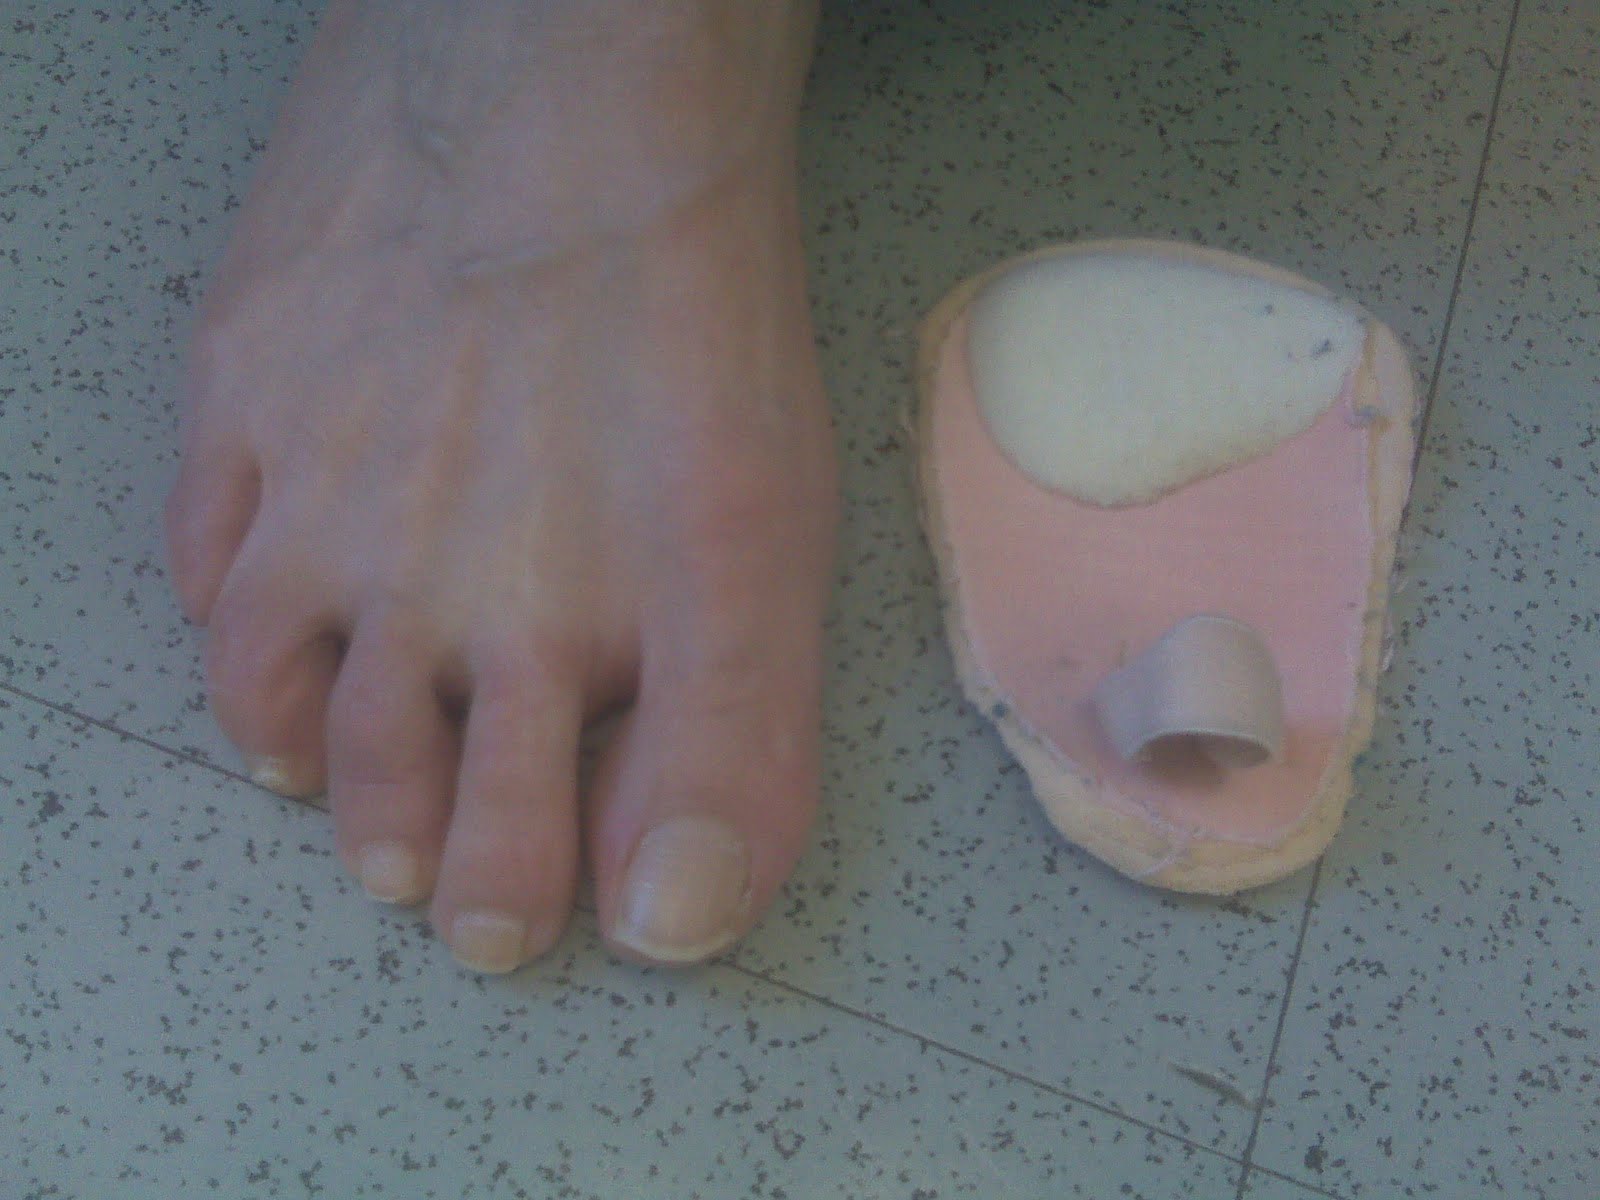 Treatment neuroma Options Morton's  Neuroma: for shoes www.drblakeshealingsole.com: